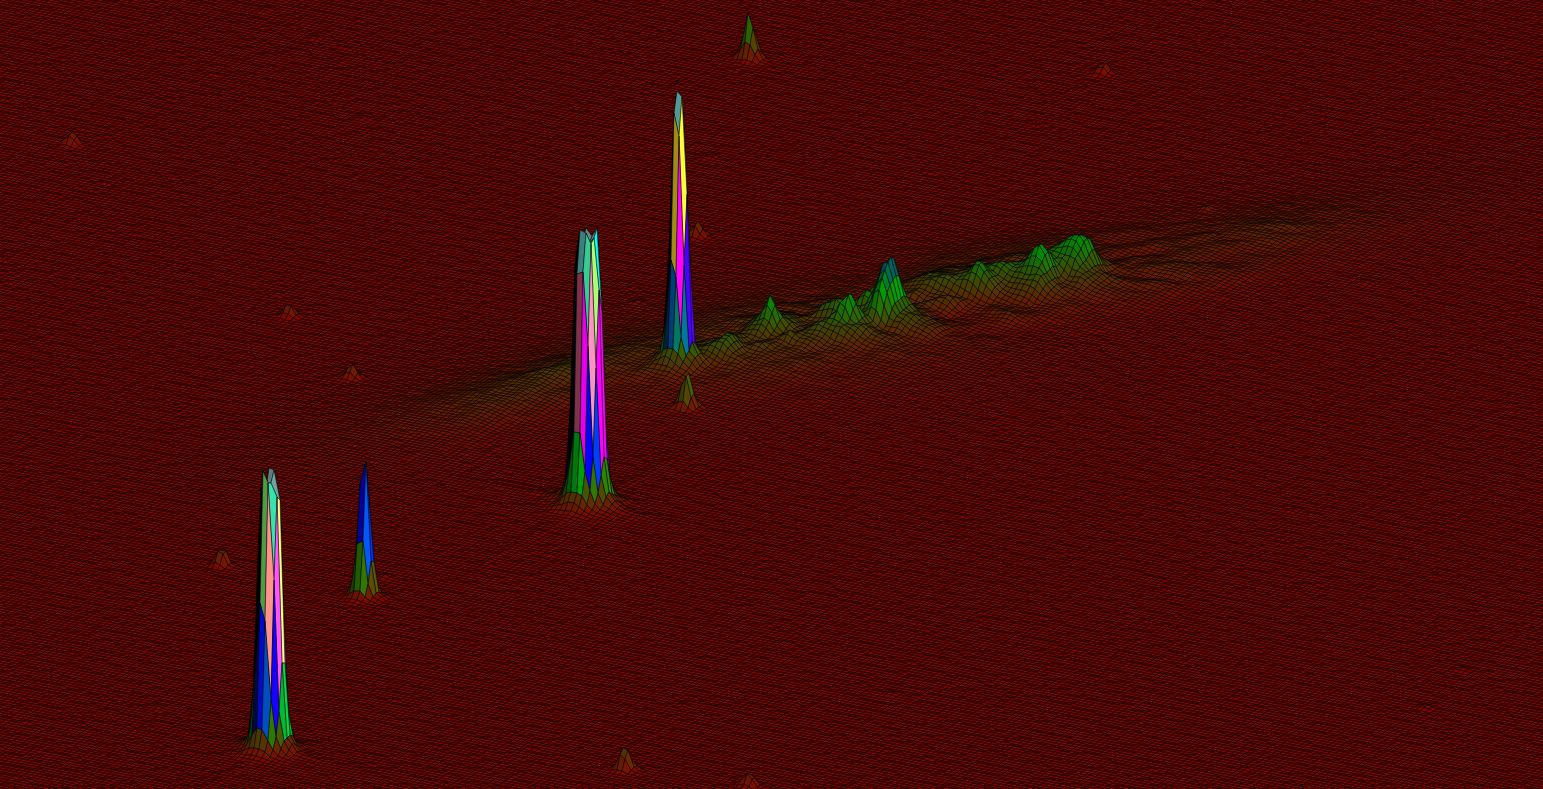 Spectro sur la supernova SN2014J dans M82 570541SN2014J06march3dplot